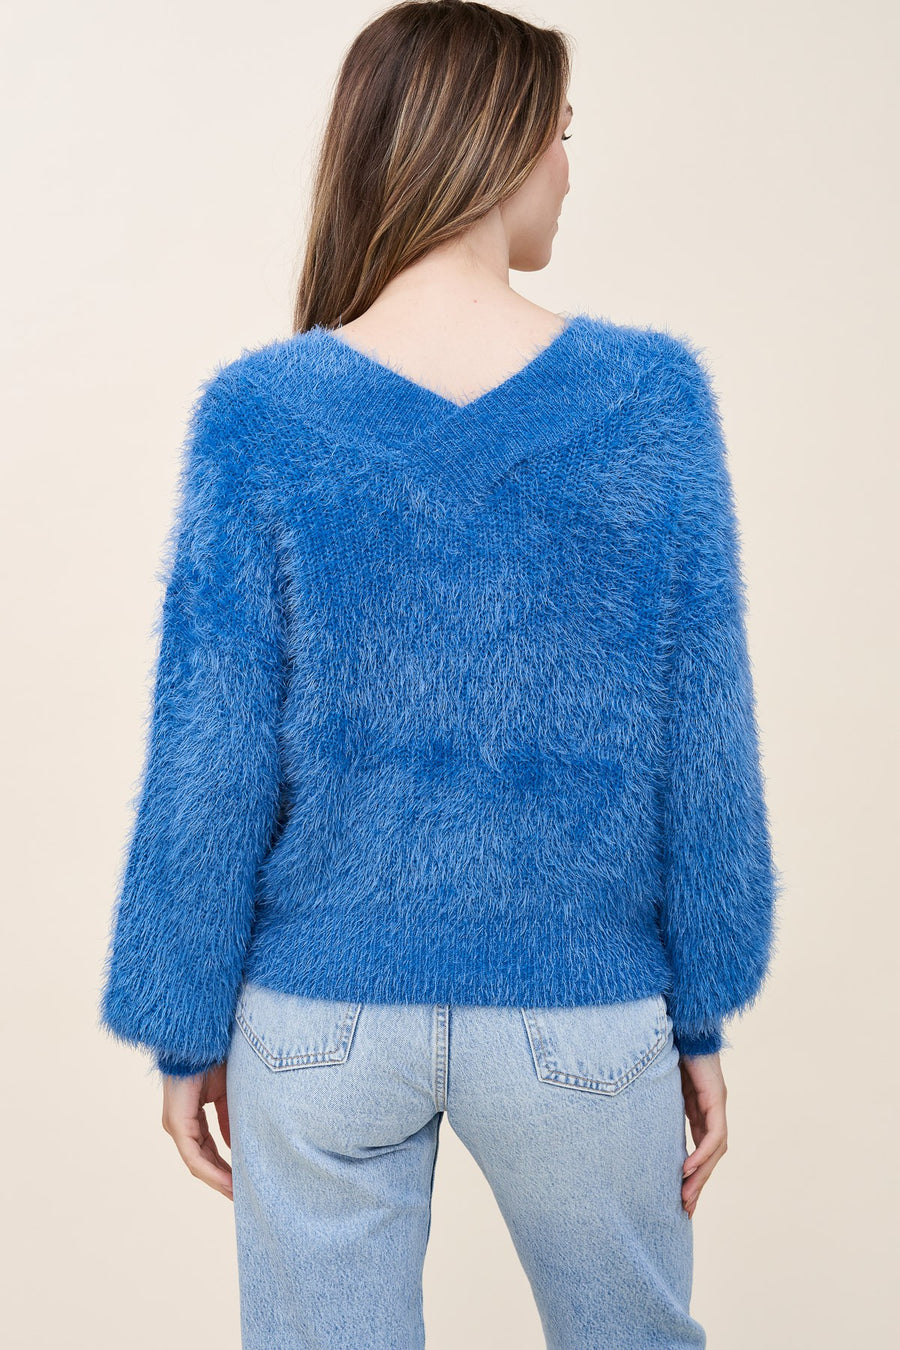 Super Soft Fuzzy Sweater